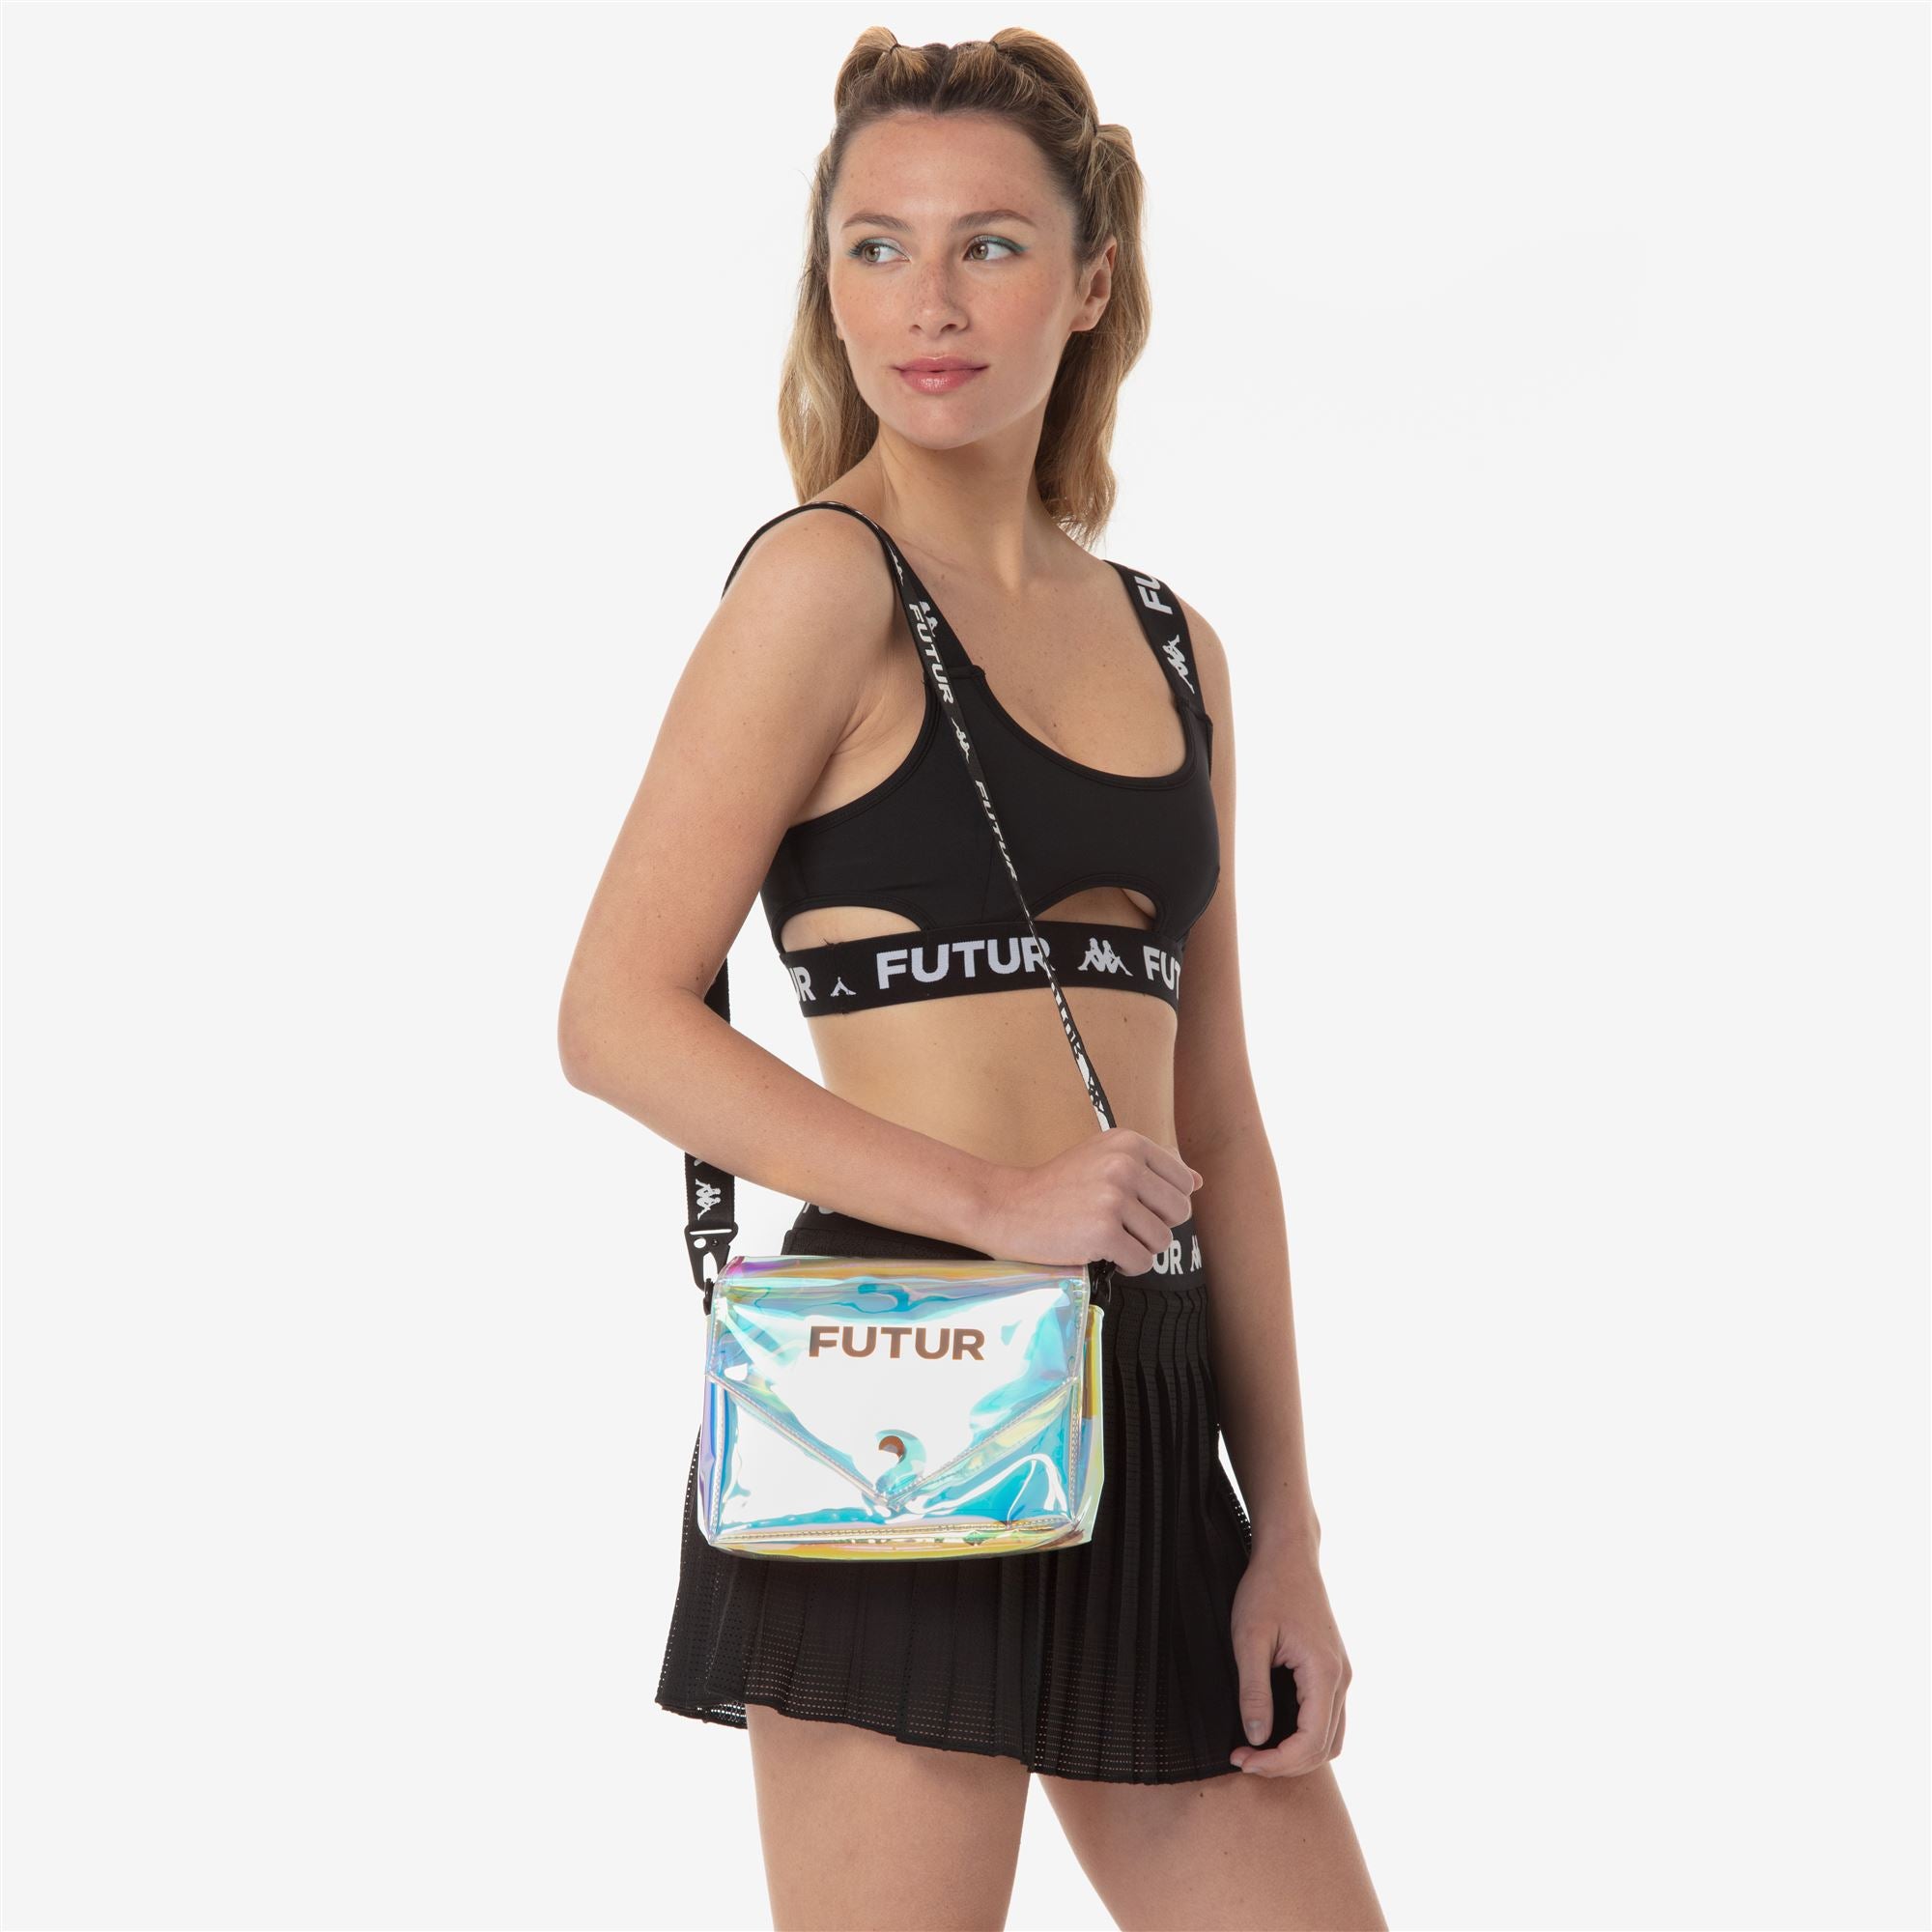 Bags Woman AUTHENTIC SHINE KFF Shoulder Bag IRIDESCENT - BLACK 